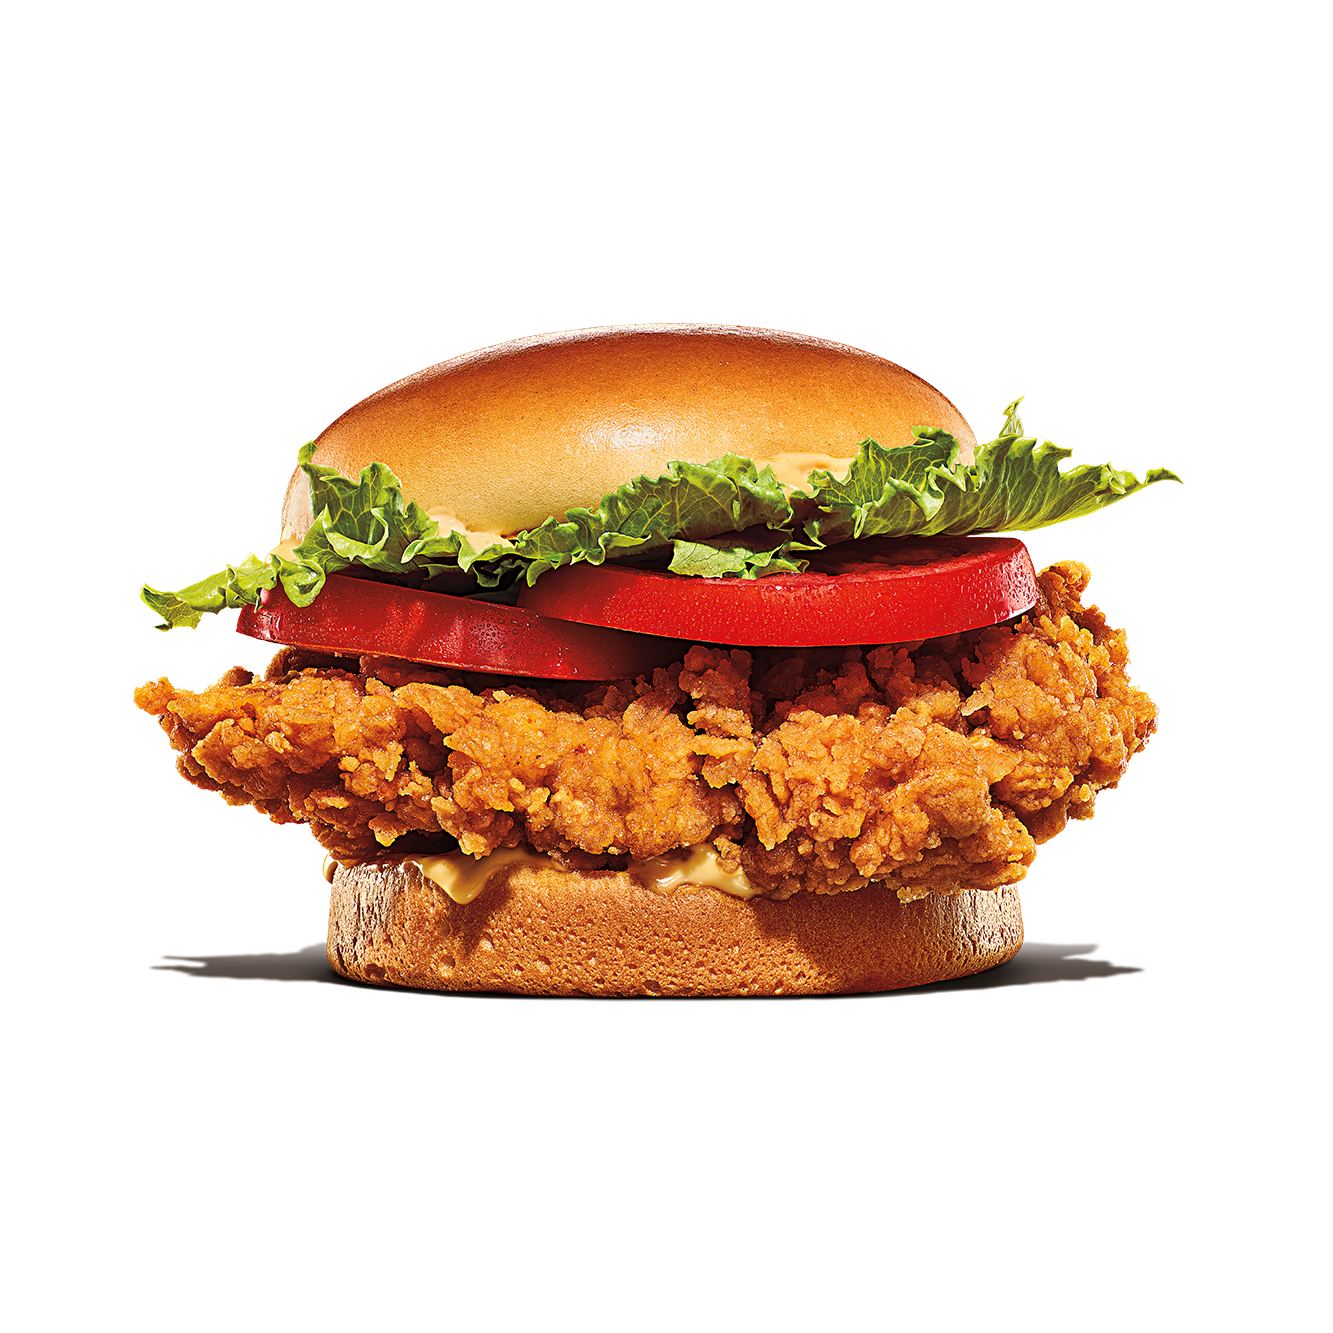 Burger King Hand-Breaded Lettuce & Tomato Crispy Chicken Sandwich Nutrition Facts